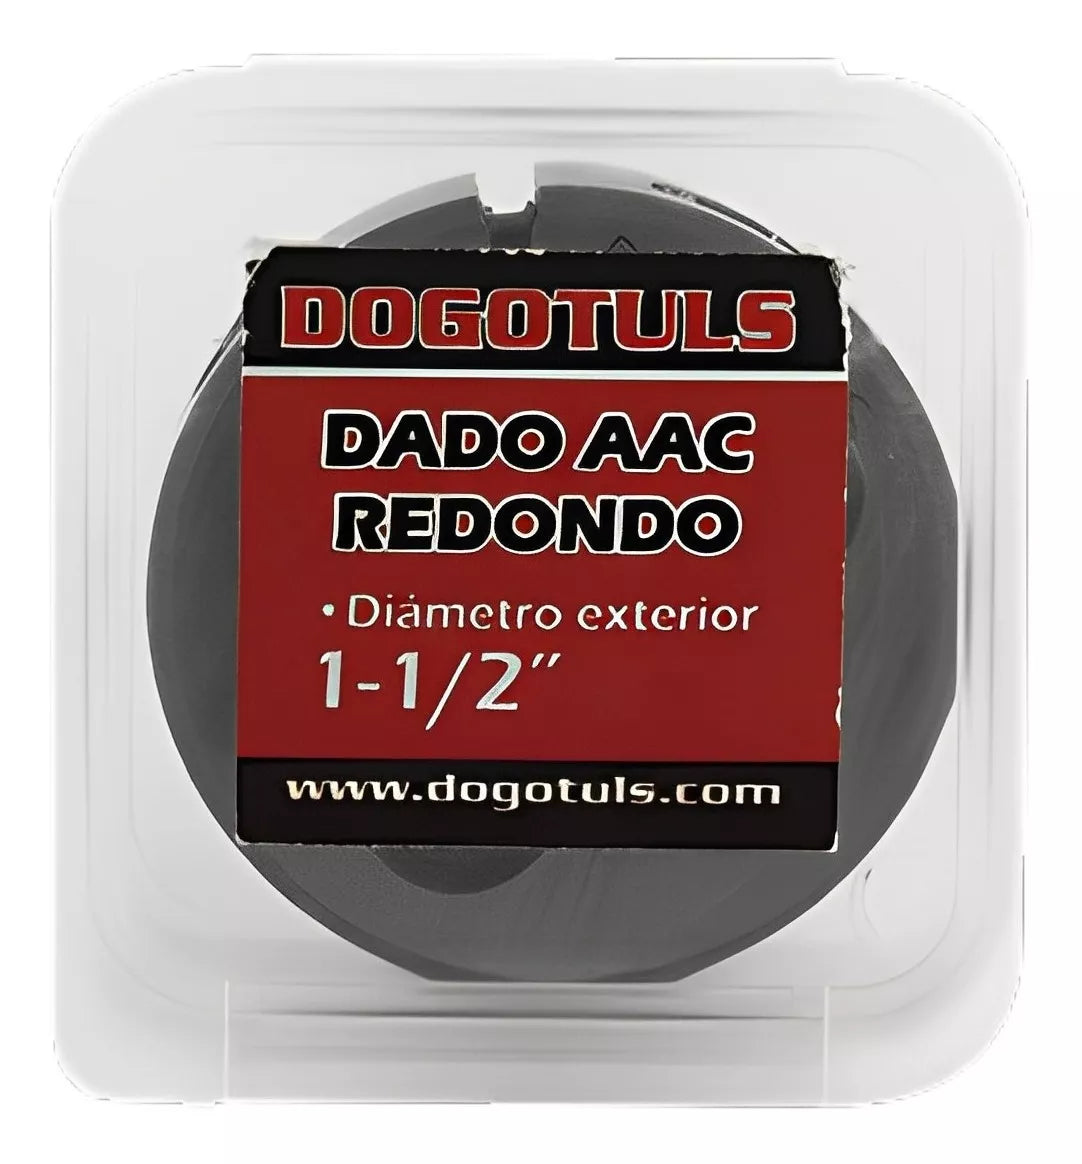 Dado Redondo Fino Dogotuls 1/2puLG - 20unc Acero